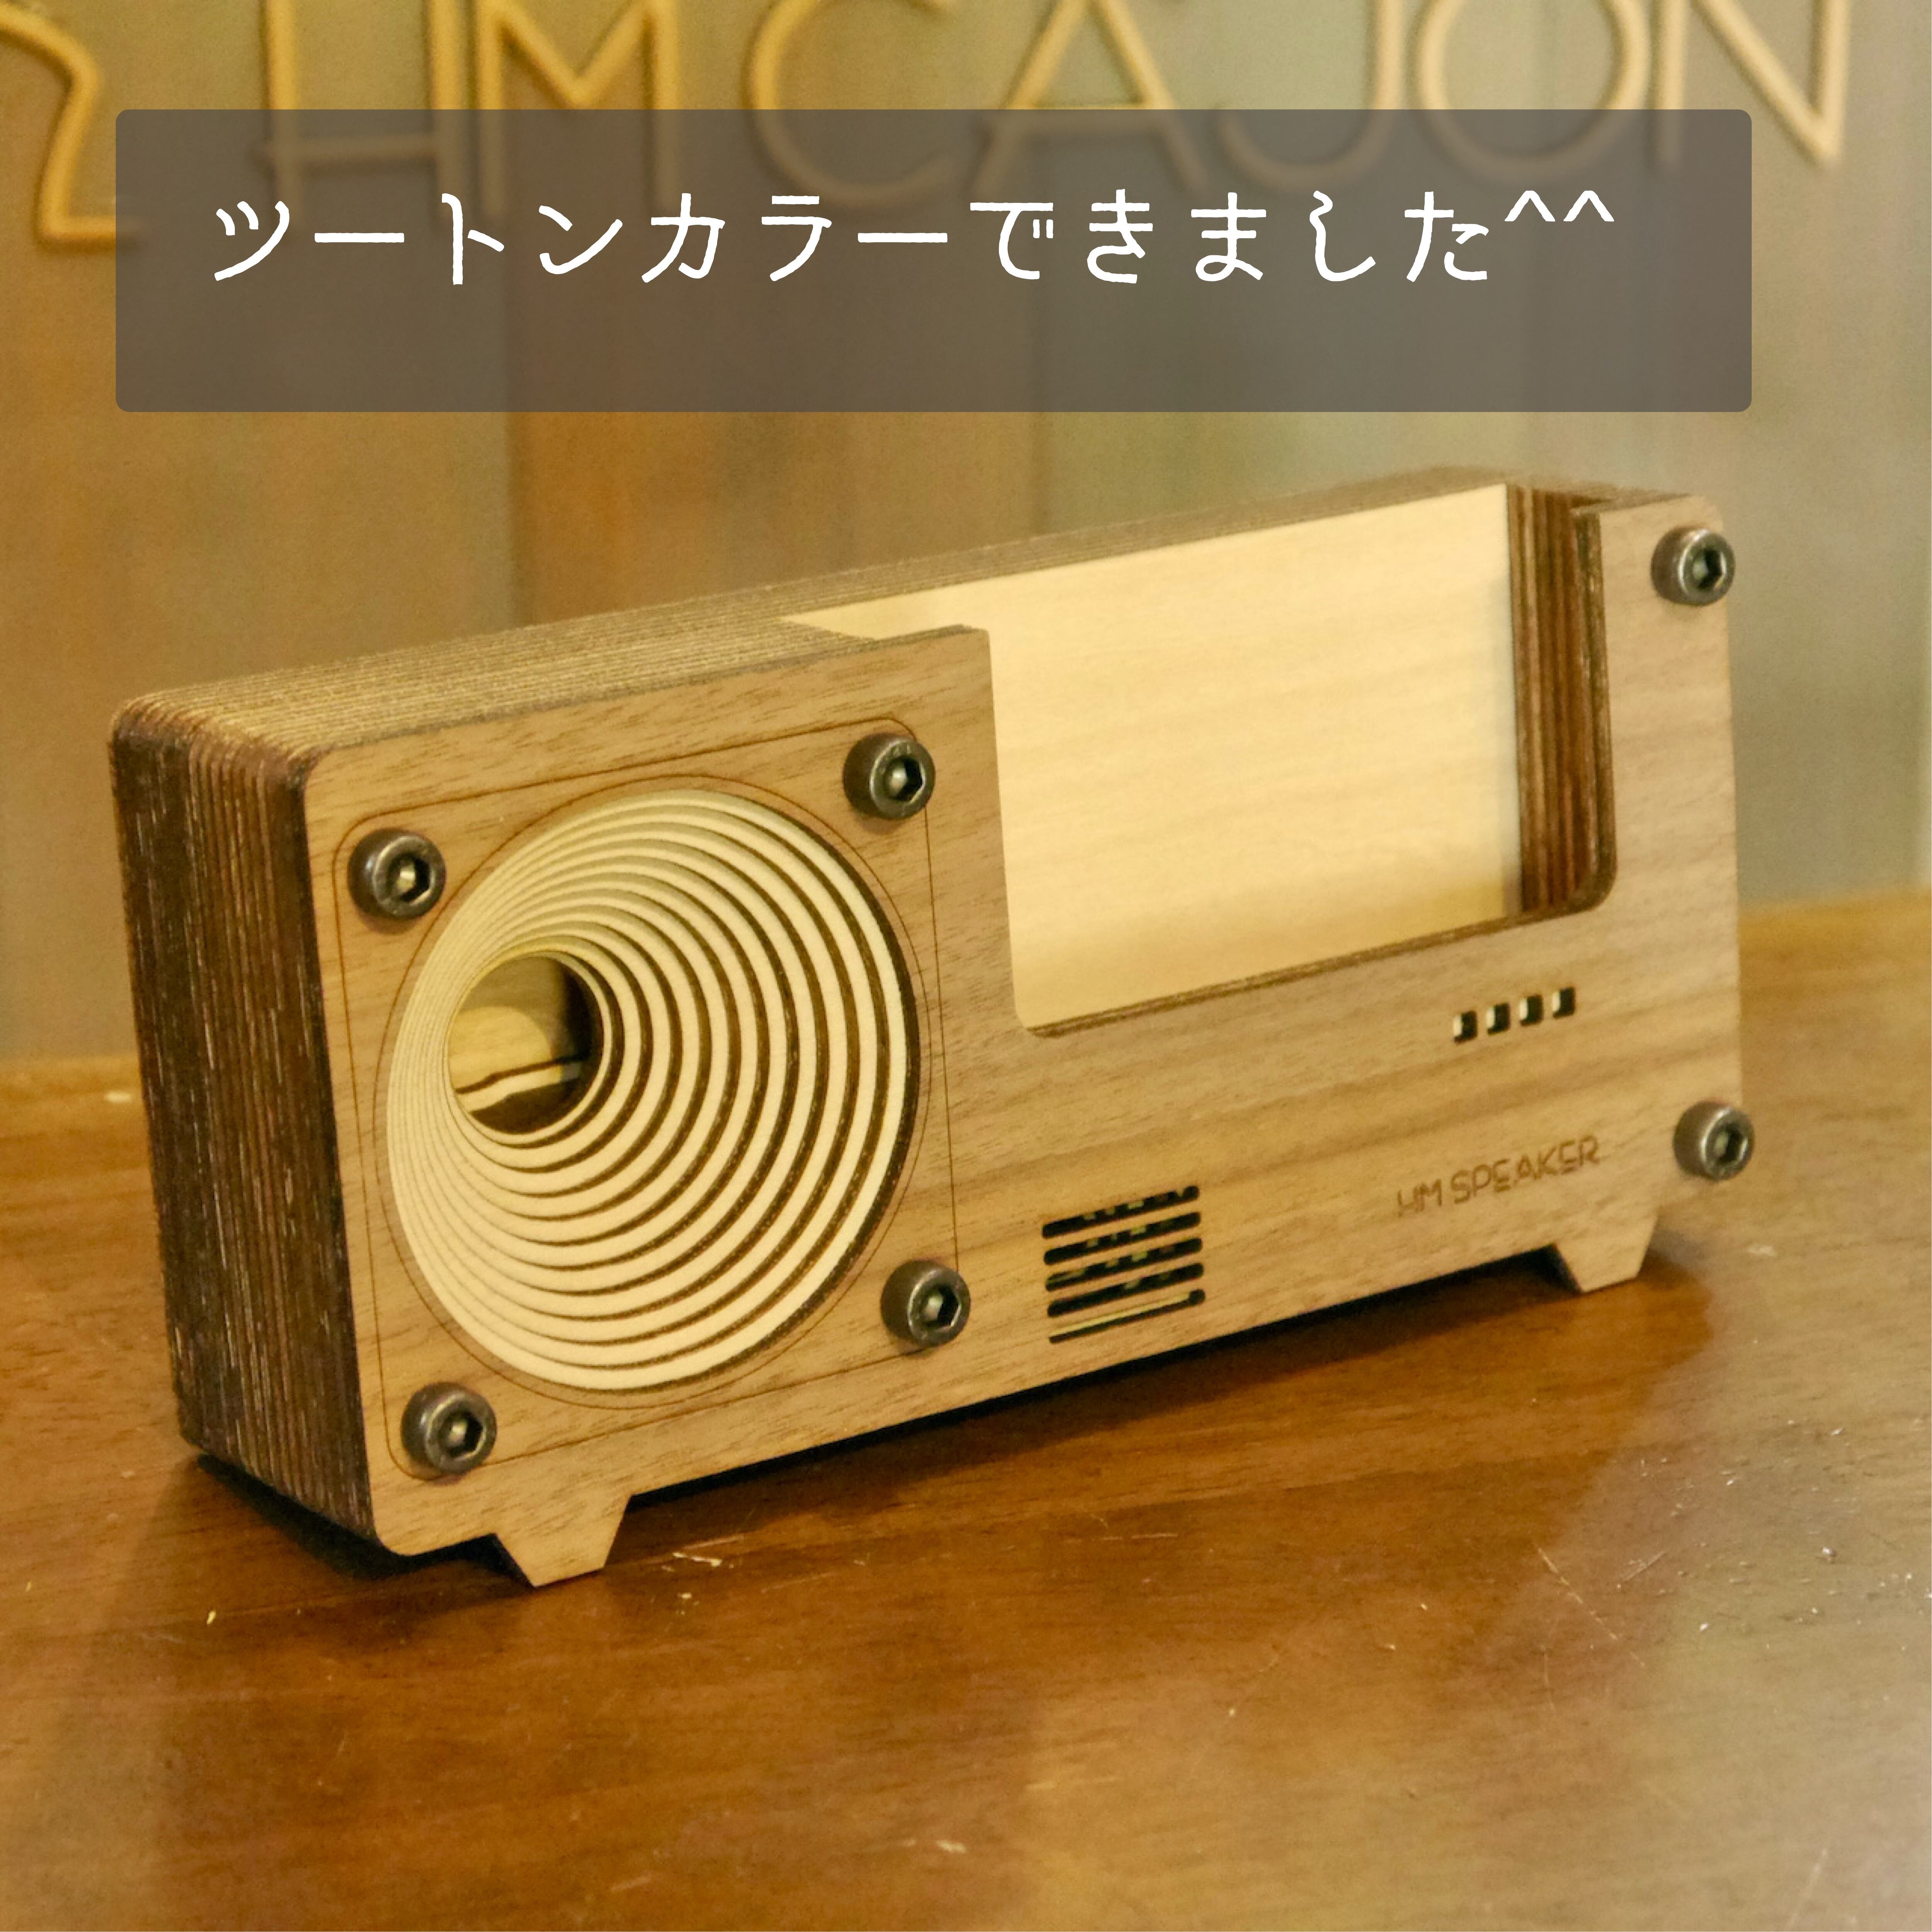 iPhone Speaker Stand ver2.0 ツートンカラー (木製スピーカースタンド・電源不要♪hm  speaker）【父の日プレゼントに】 HM CAJON